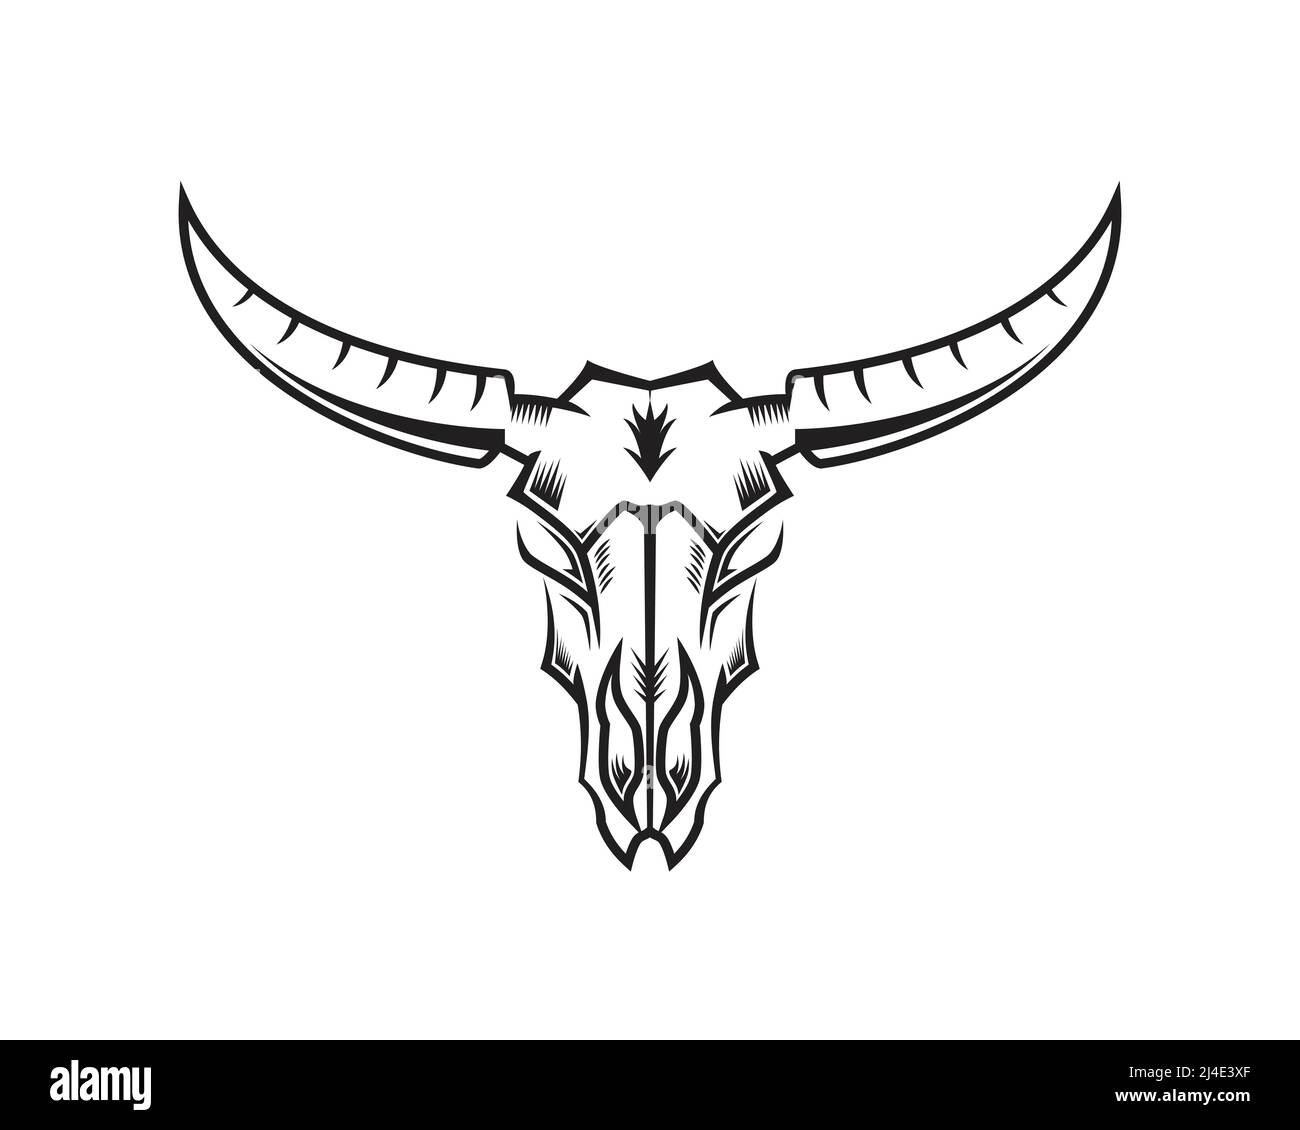 Bull Skull Illustration with Silhouette Style Vector Stock Vector